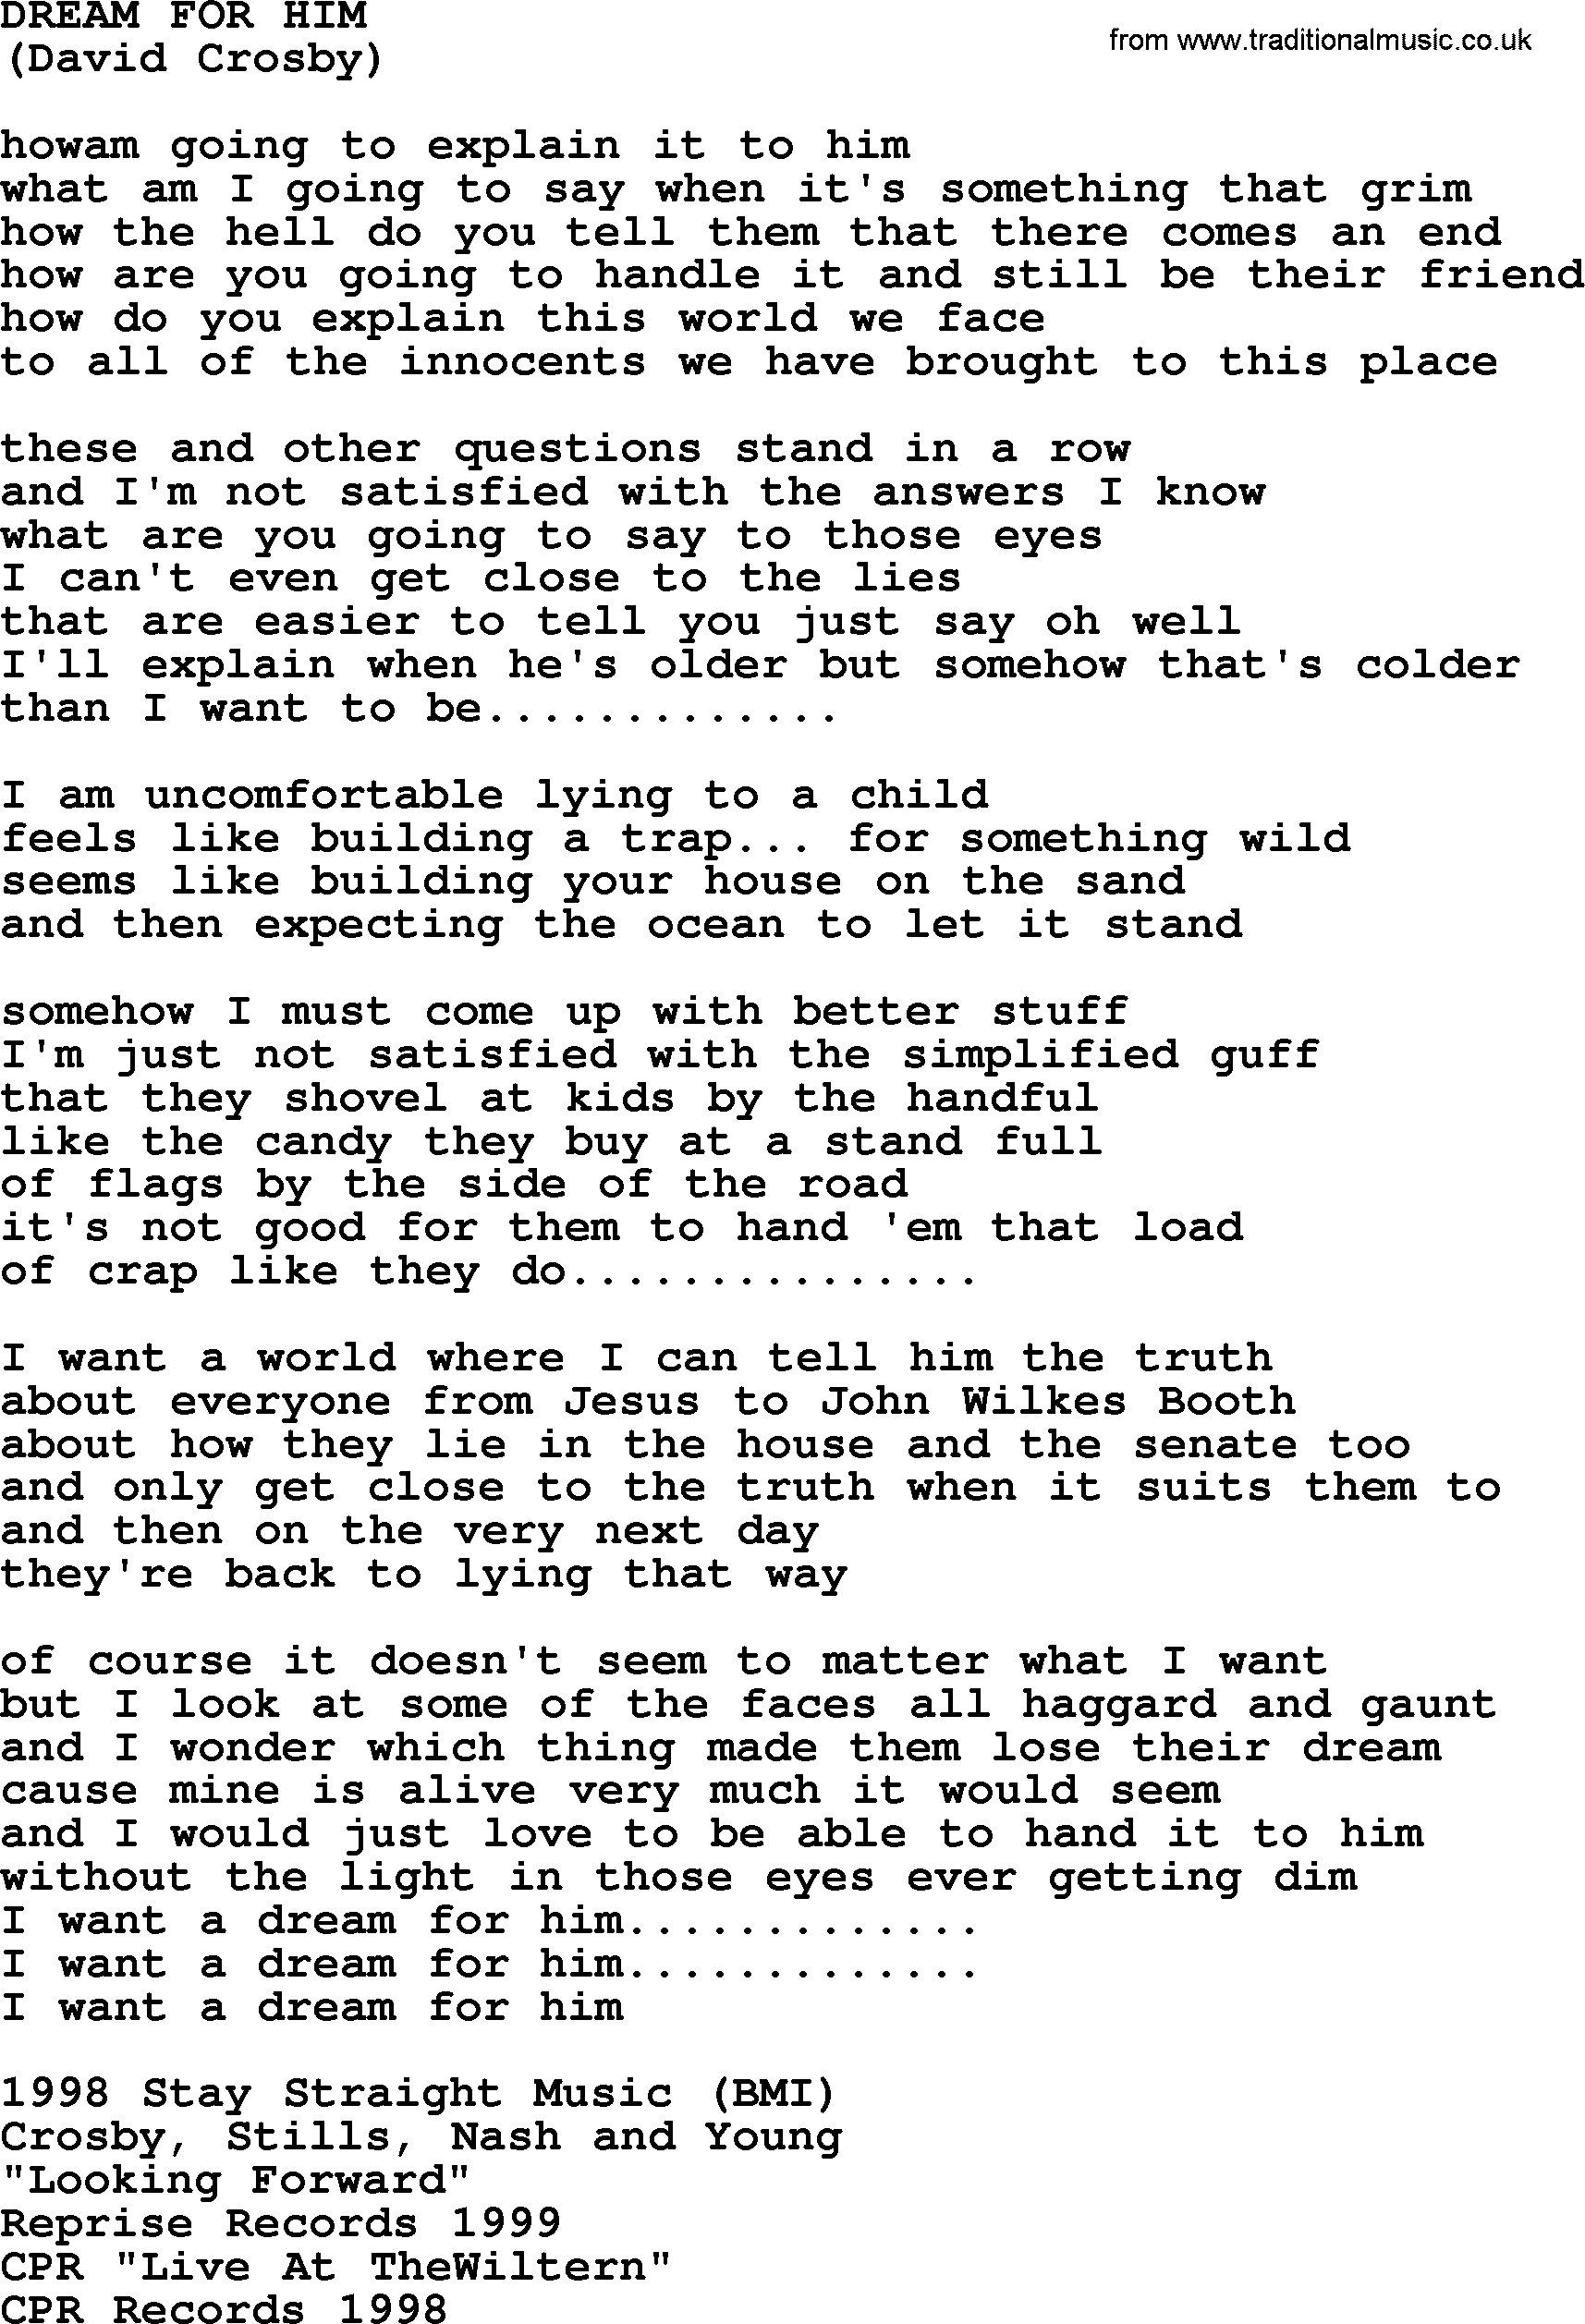 The Byrds song Dream For Him, lyrics